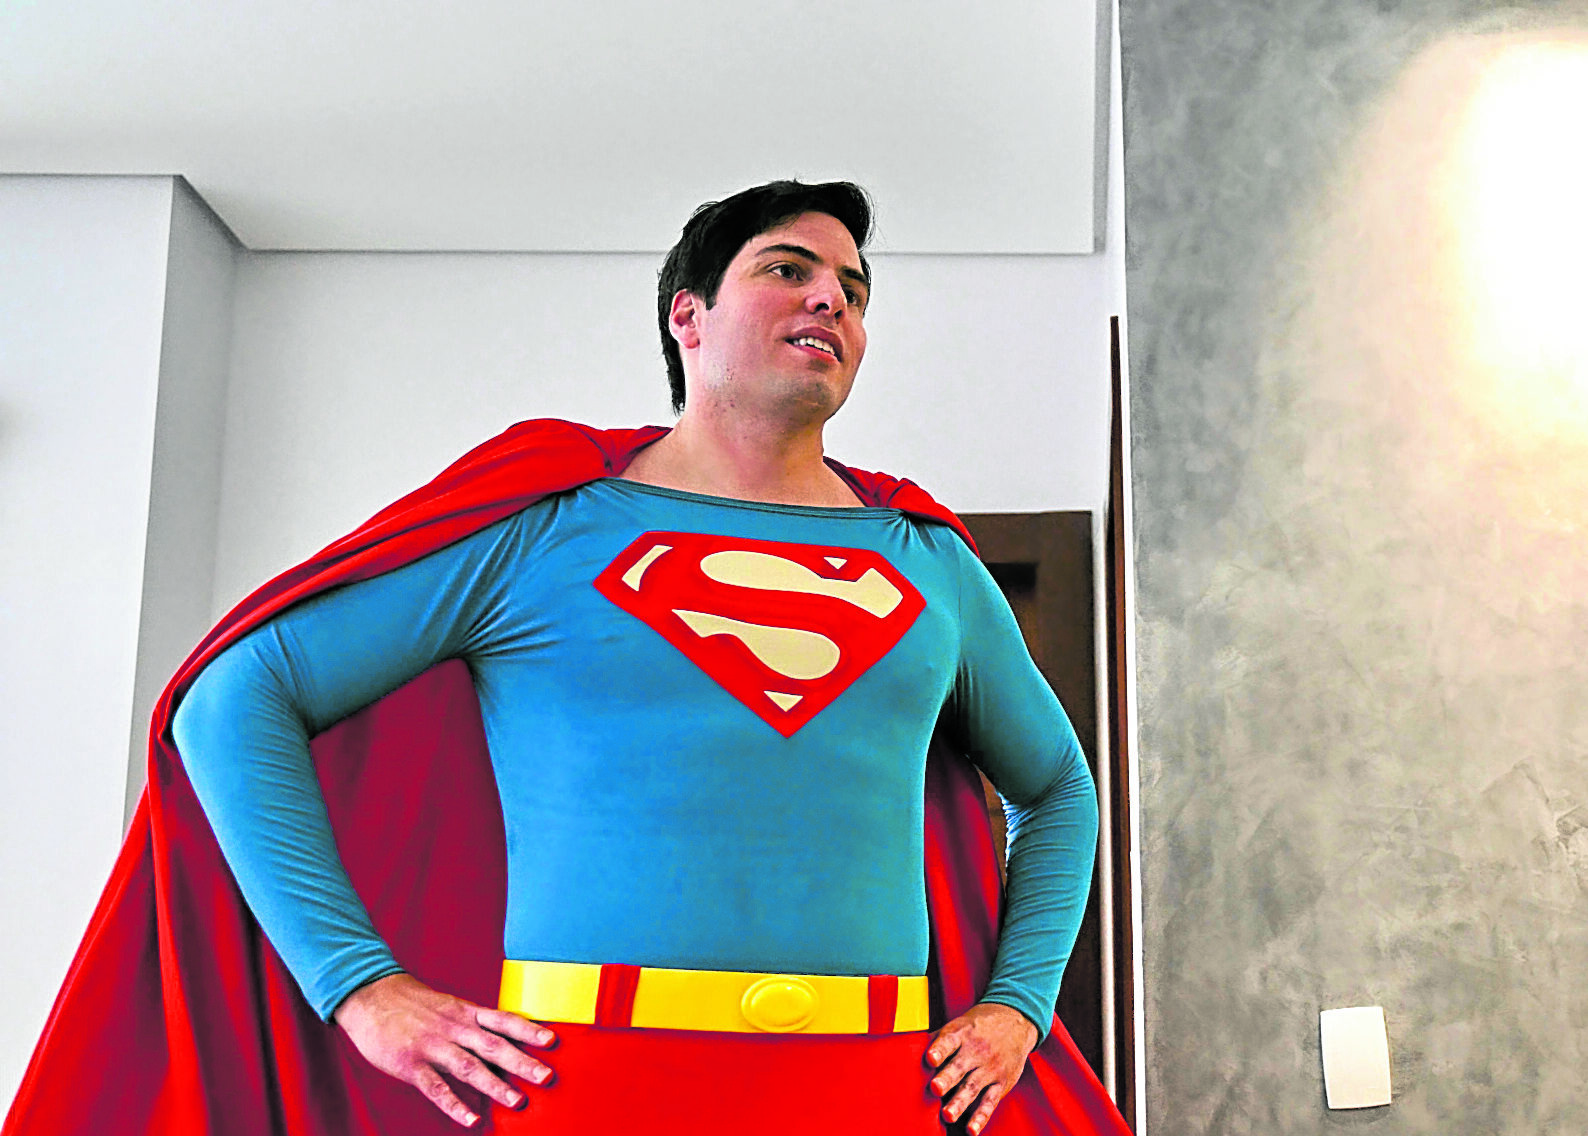 Meet Leonardo Muylaert, 36,the “Brazilian Superman.” 